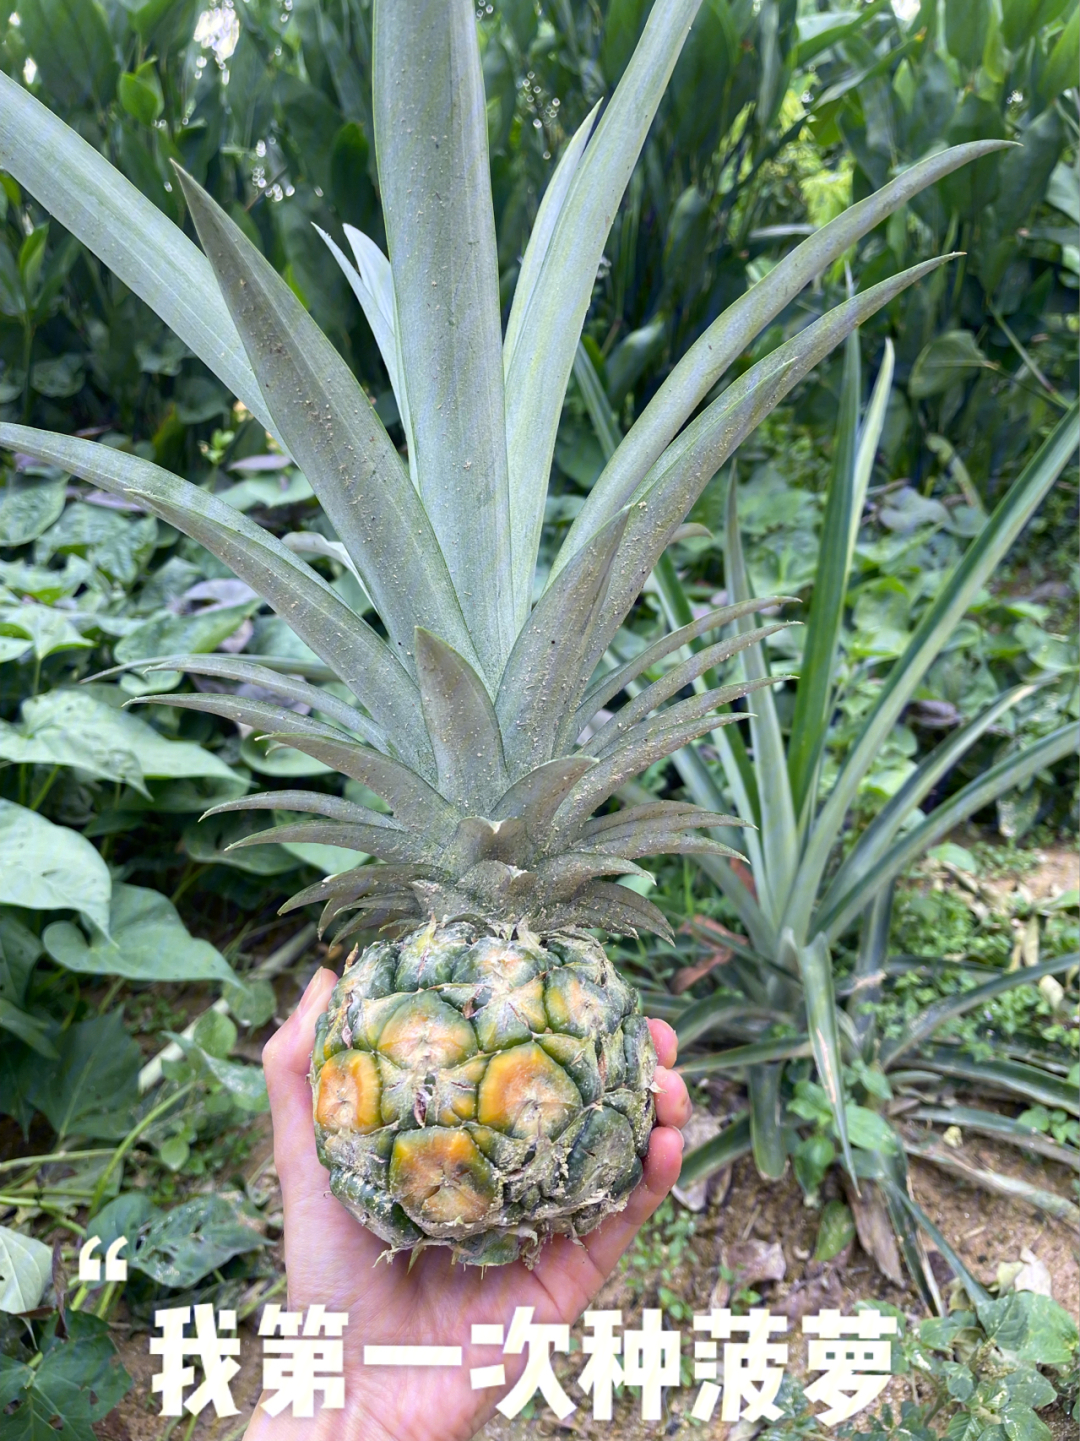 gardening第一次成功种菠萝1年9个月